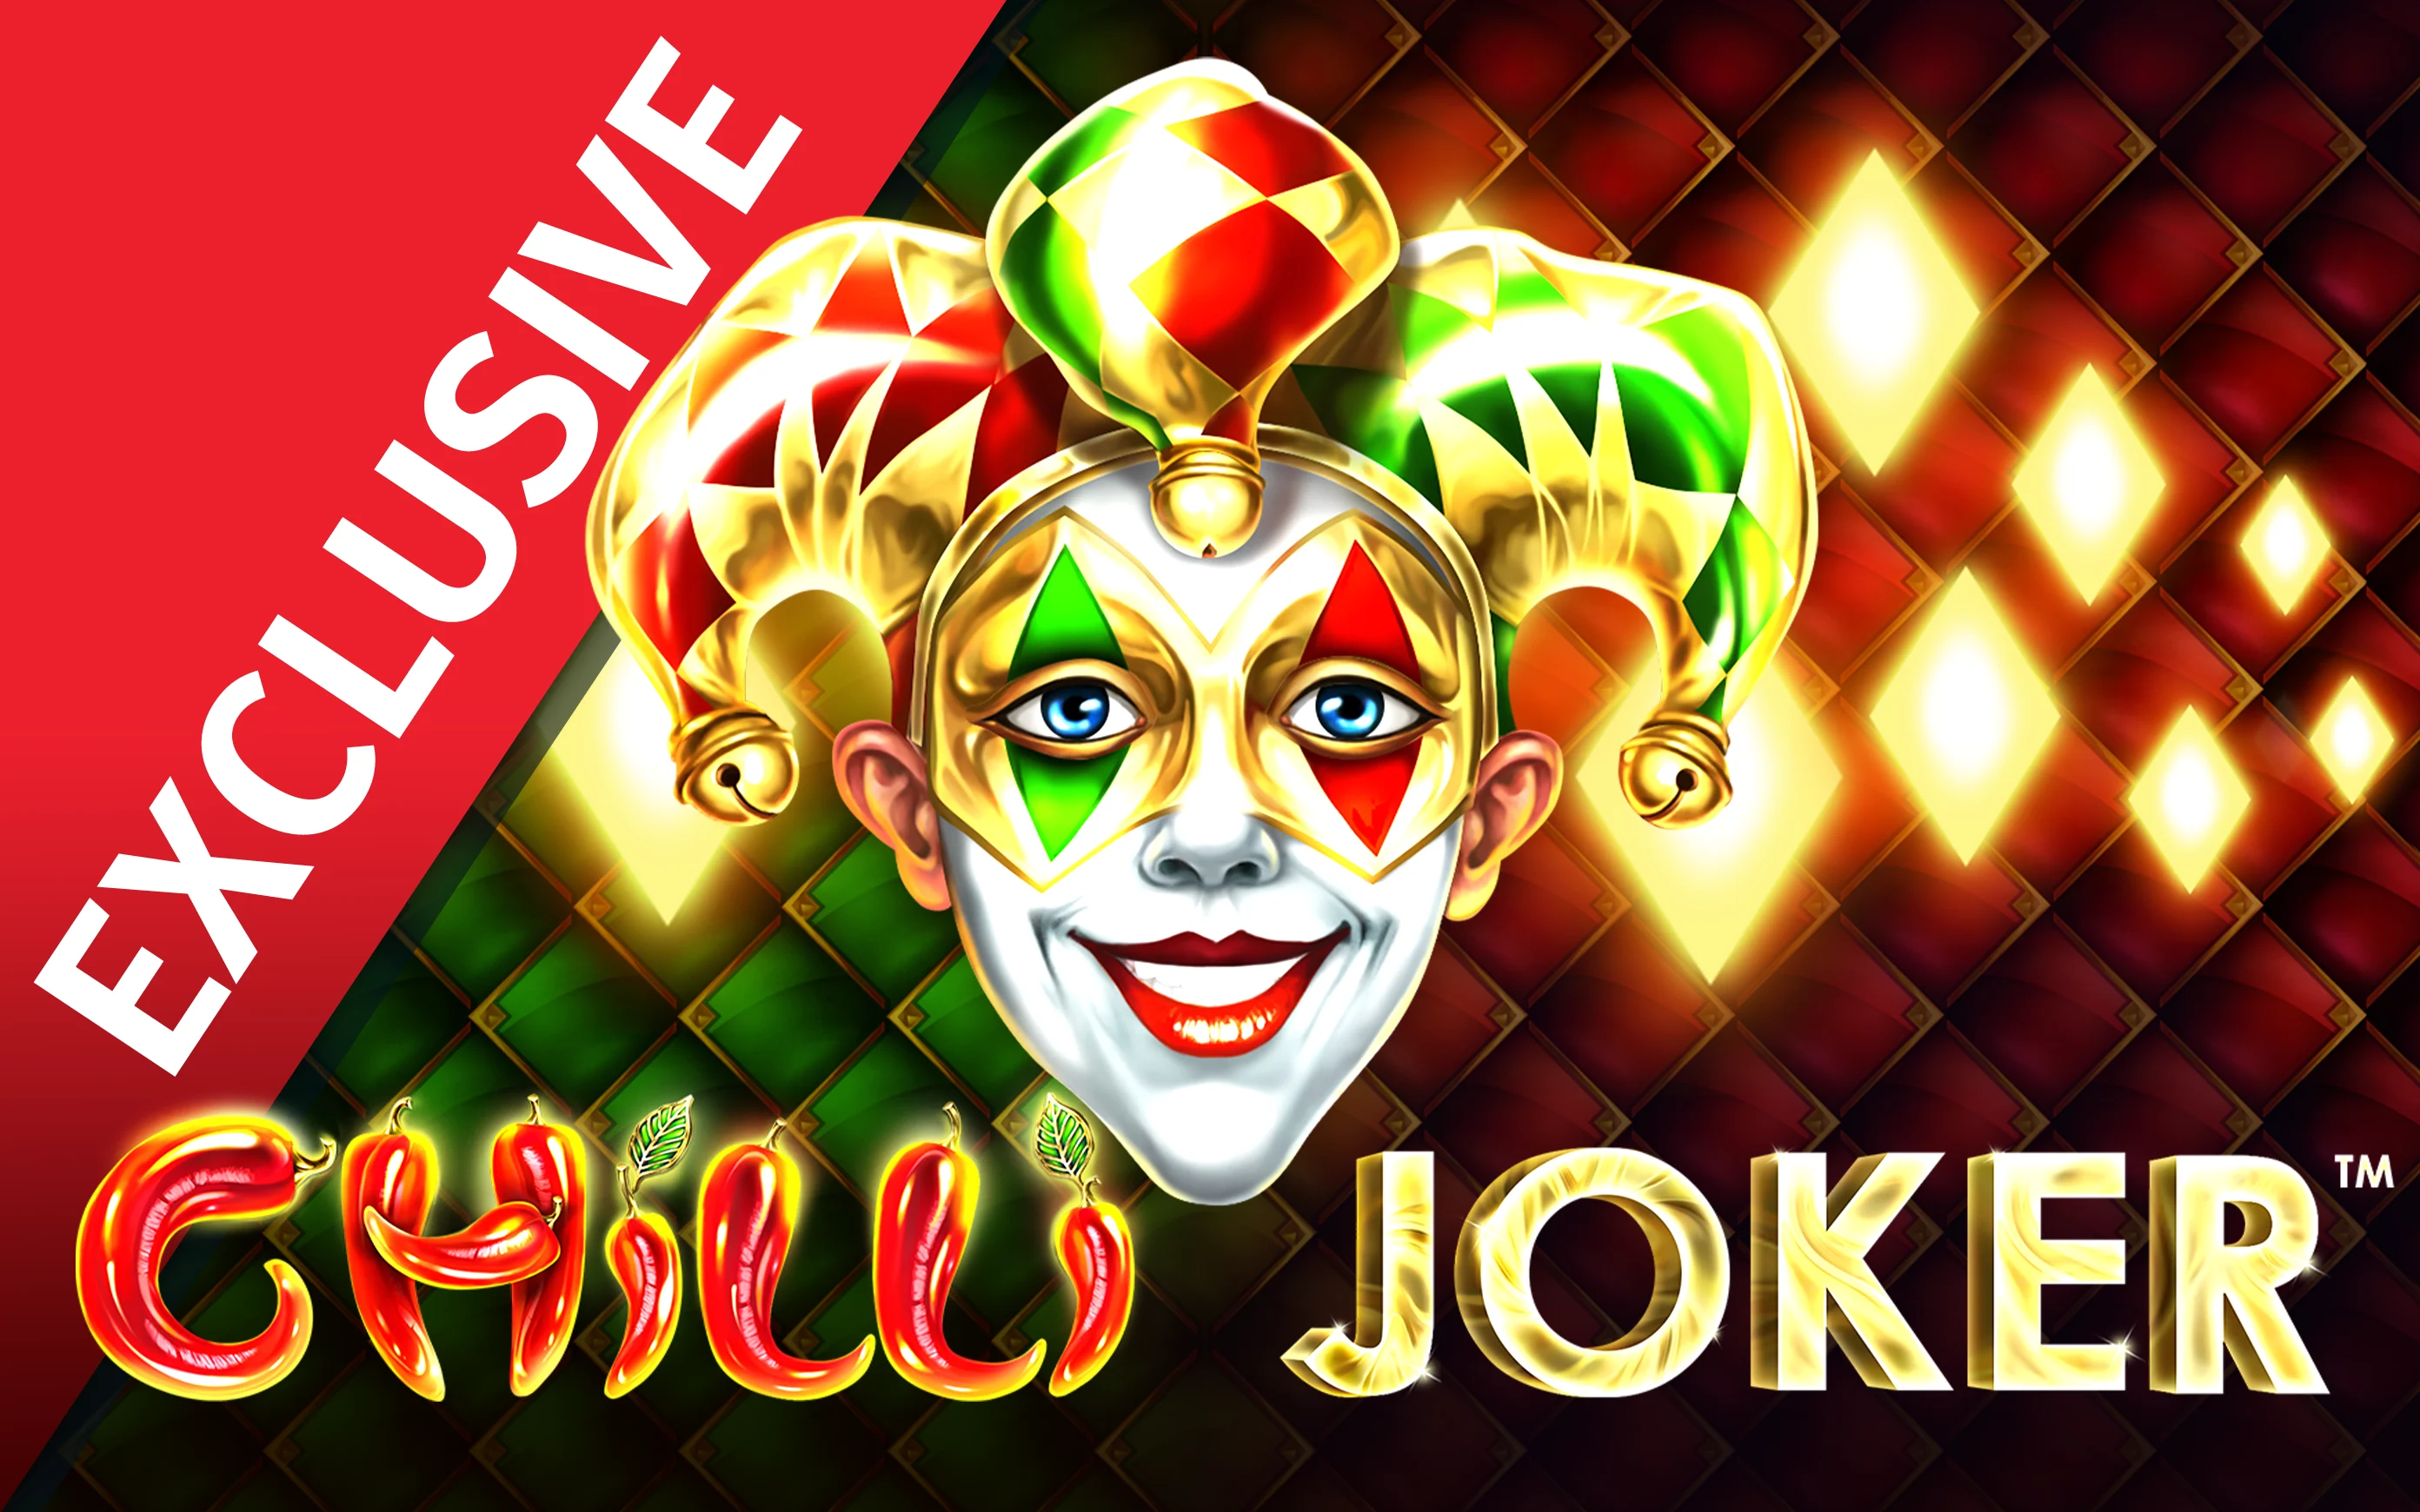 Joacă Chilli Joker în cazinoul online Starcasino.be